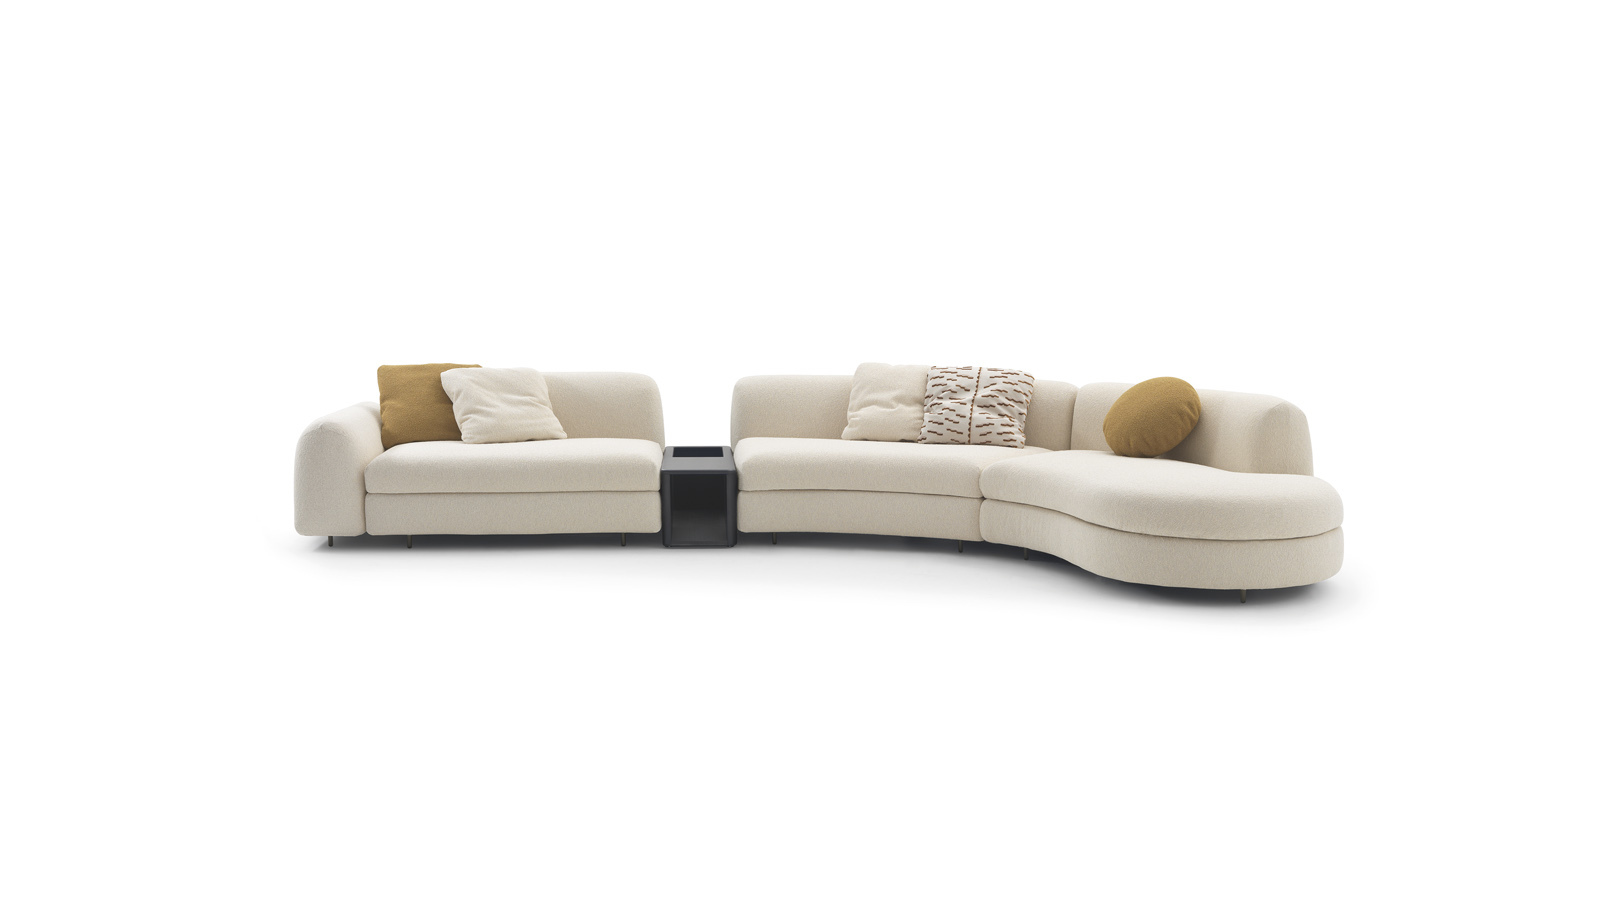 Edo Modular Sofa by Arflex | Haute Living